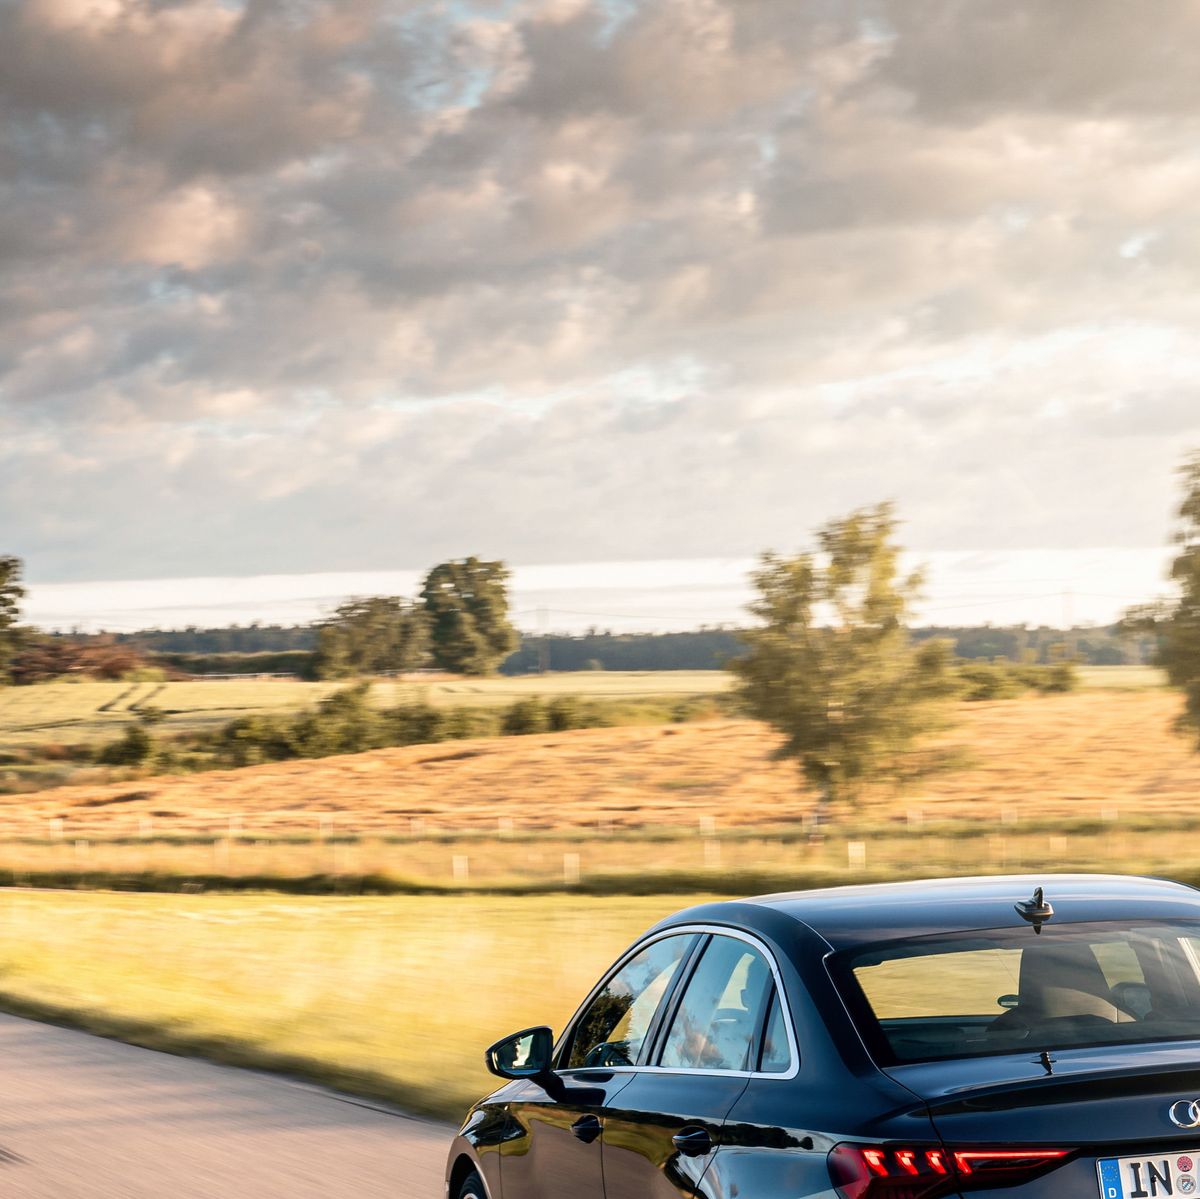 Audi Unveils 400 HP RS3 Sedan & Sportback for 2022